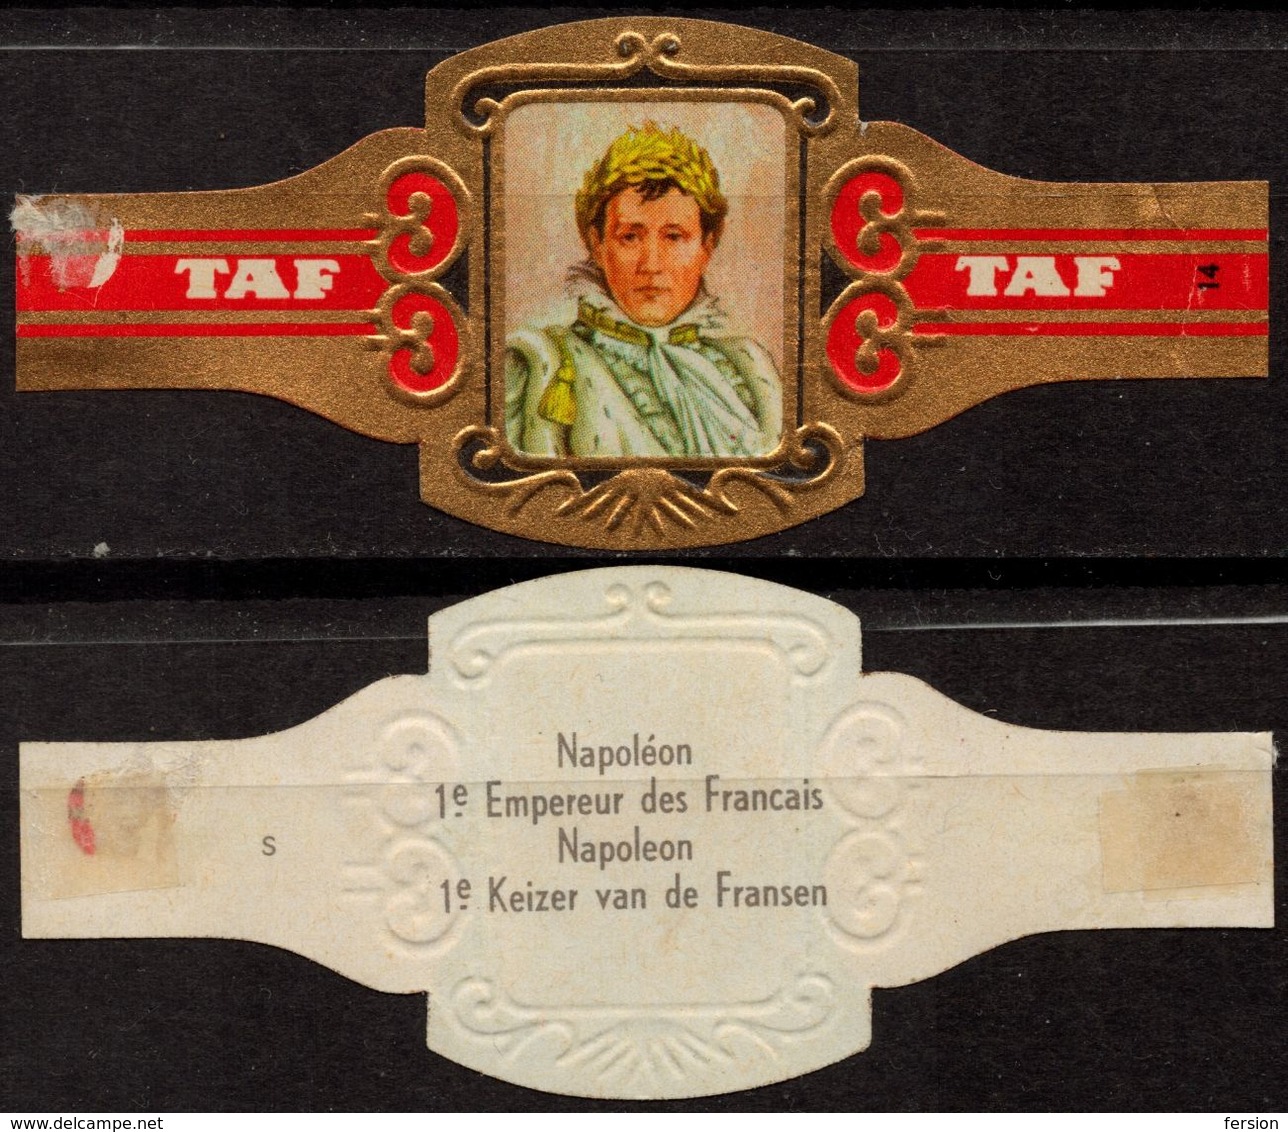 EMPEROR Napoleon - Belgium Belgique - TAF - CIGAR CIGARS Label Vignette - Labels